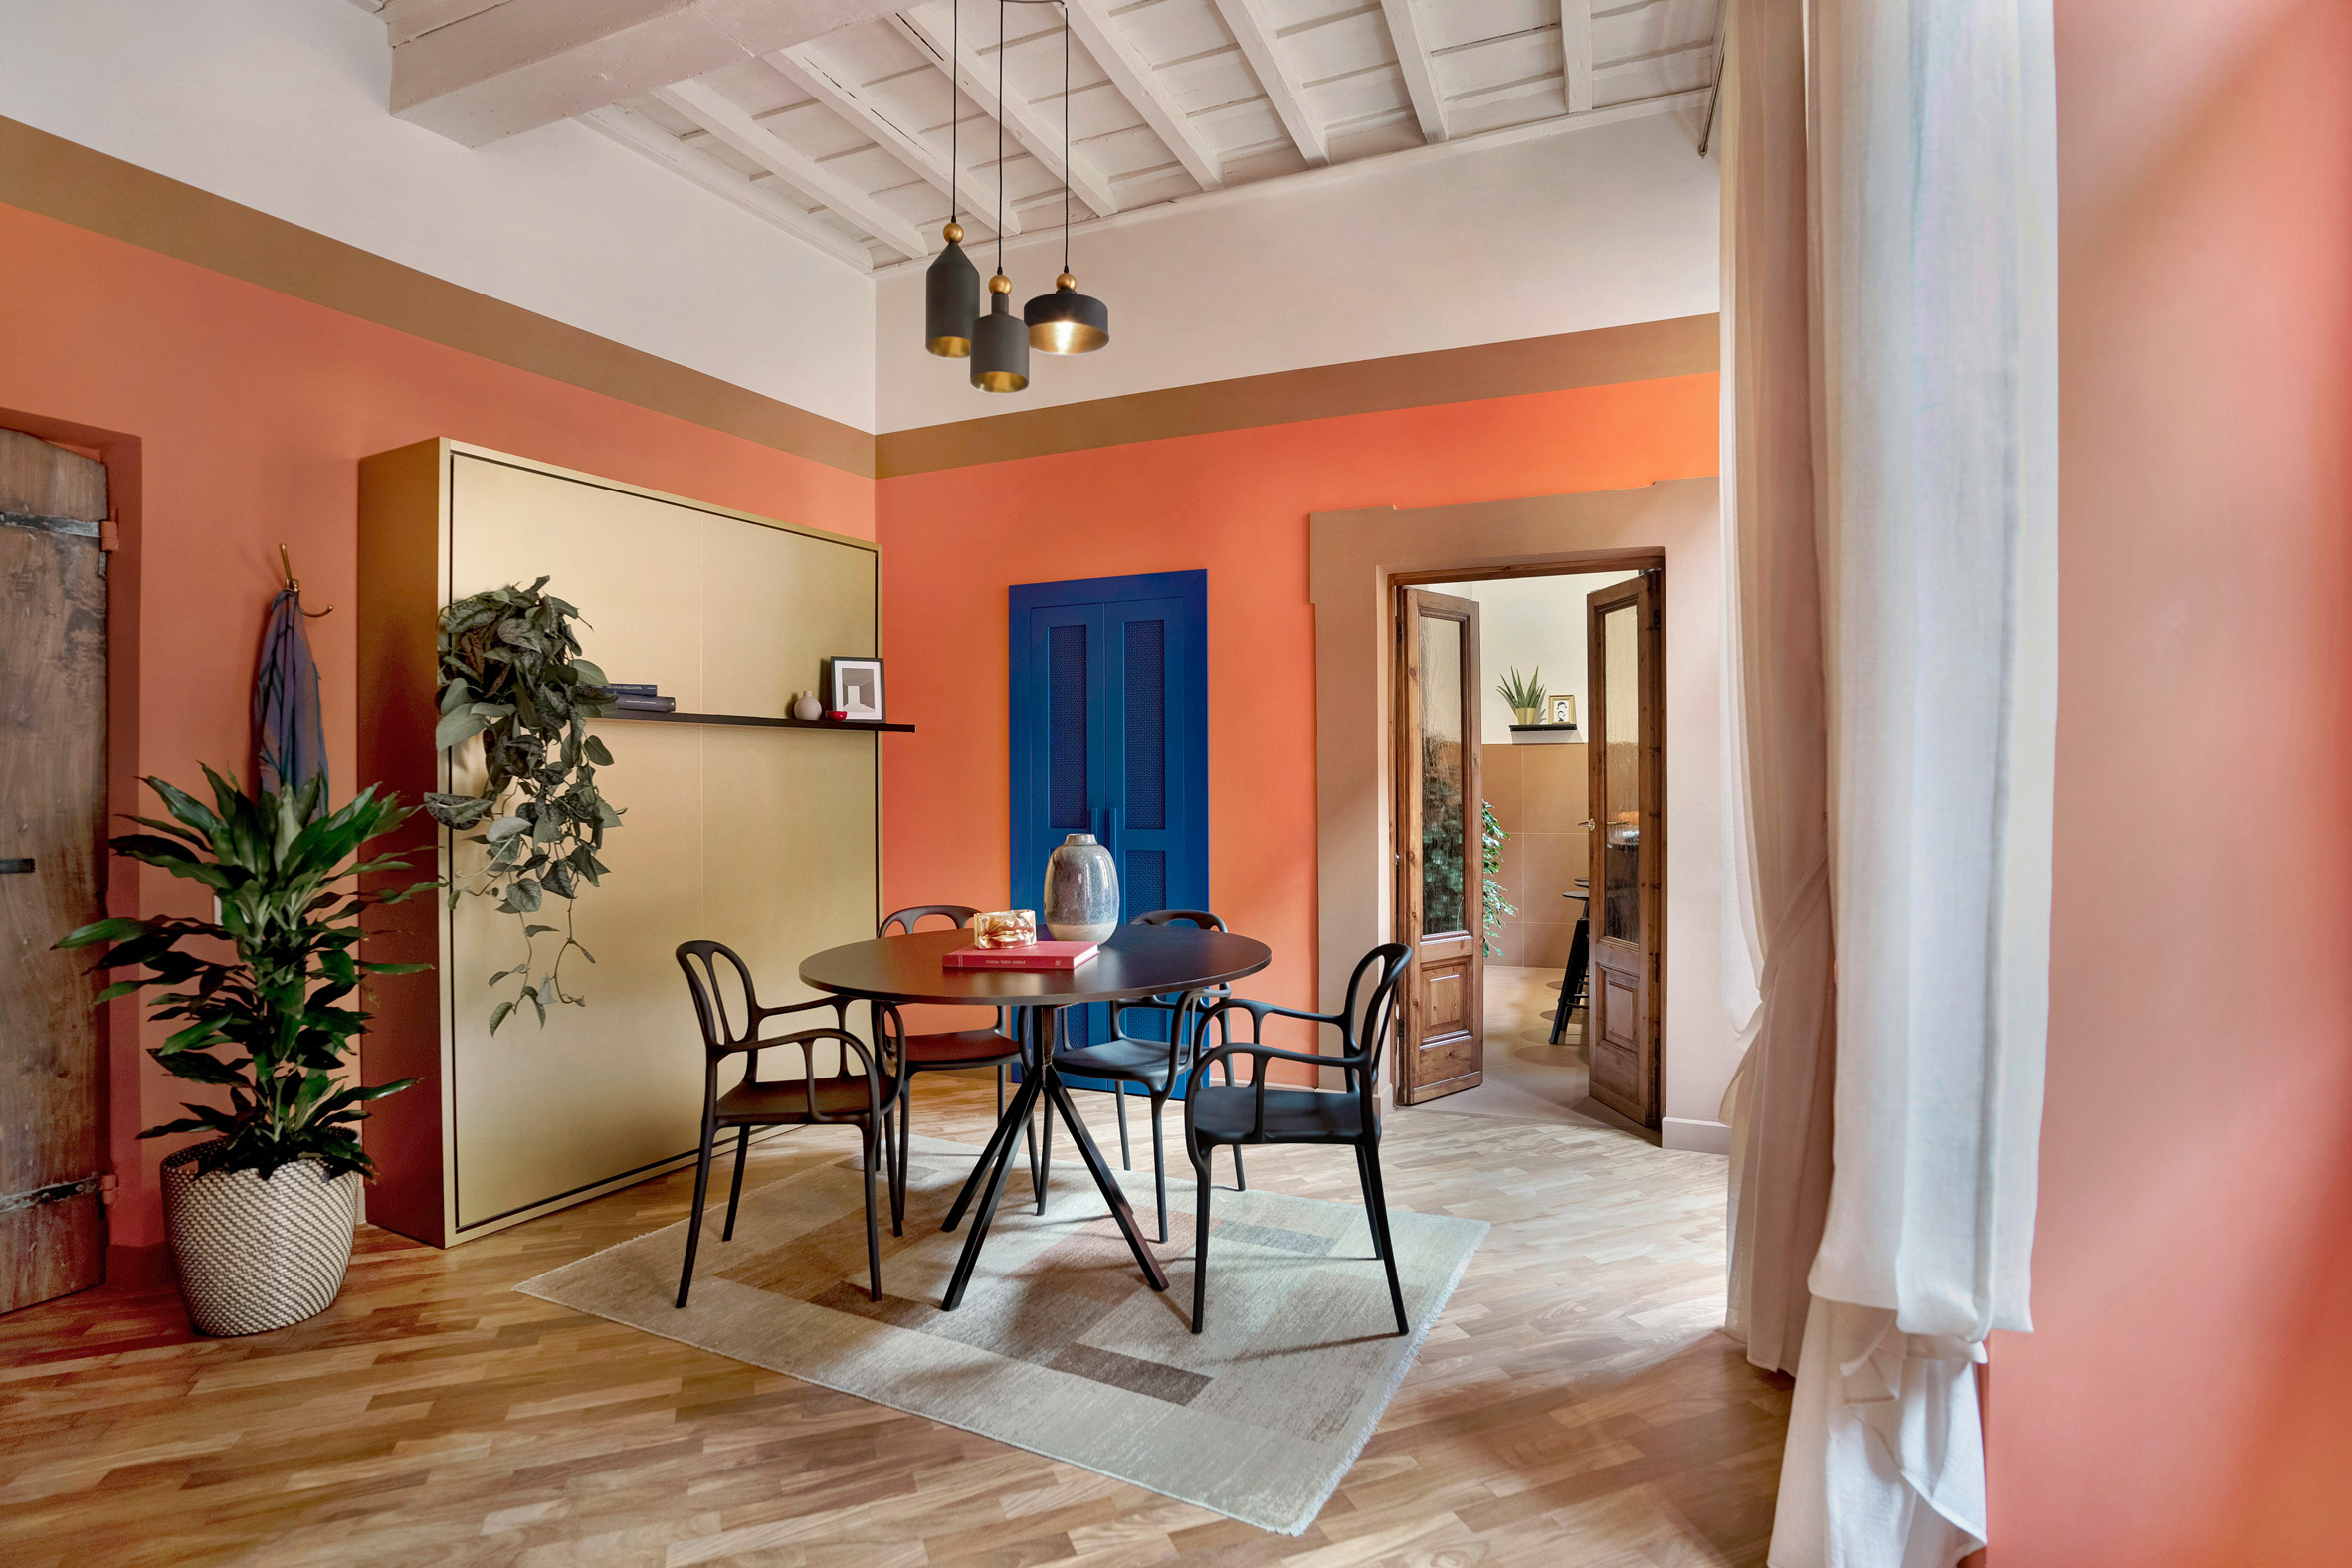 Trevi House apartment in Rome designed by Studio Venturoni